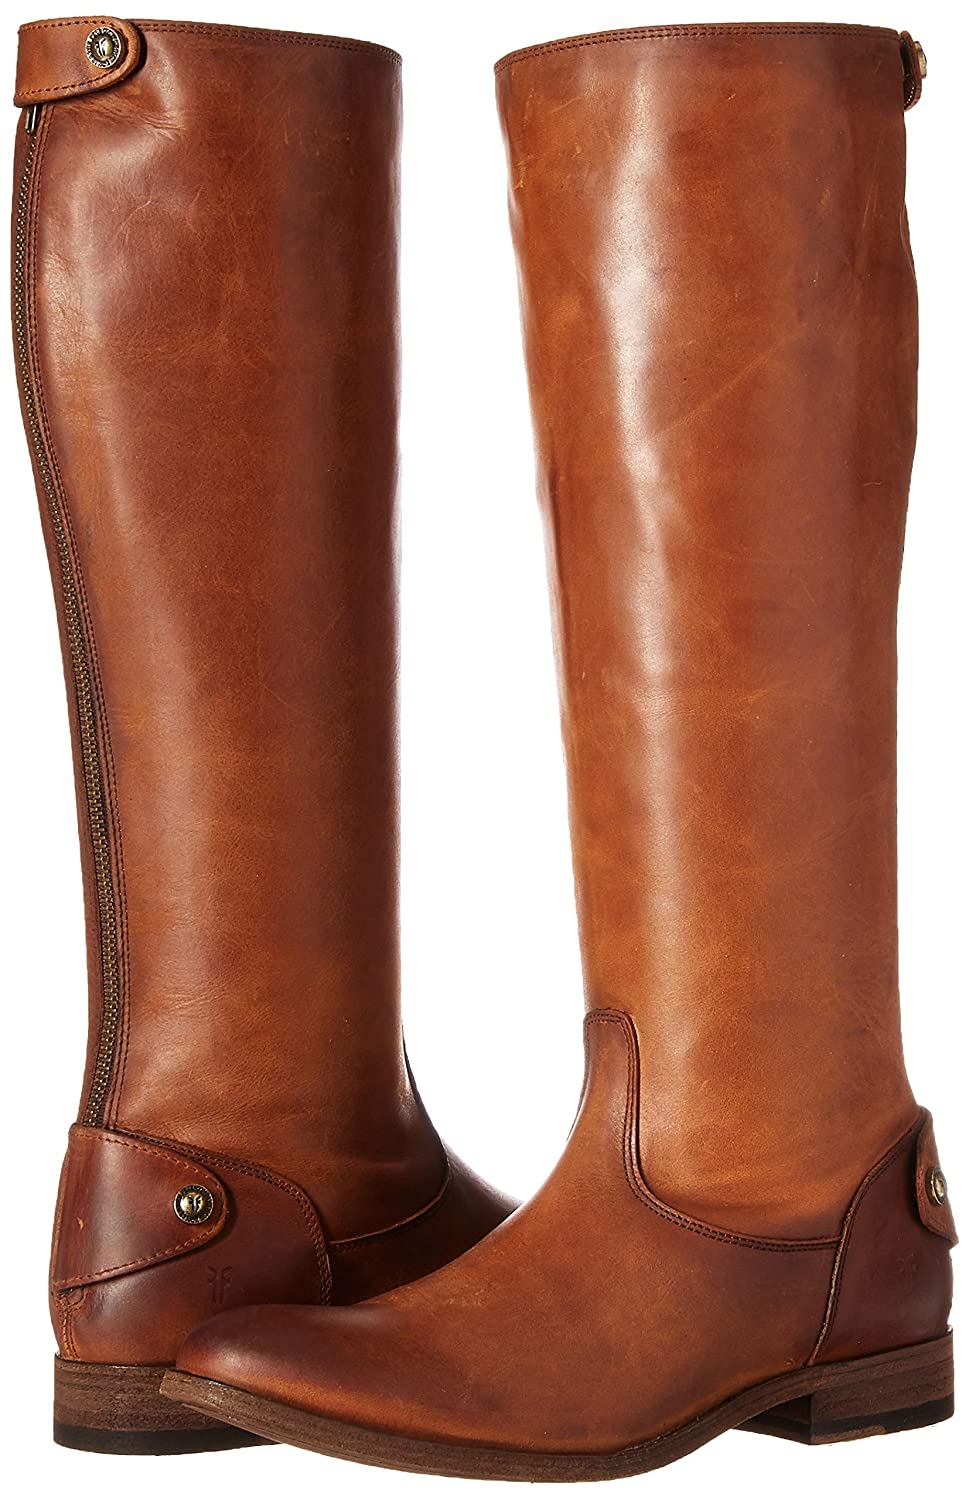 FRYE Women's Melissa Button Back-Zip Boot, Cognac, Size 9.0 n6TO | eBay